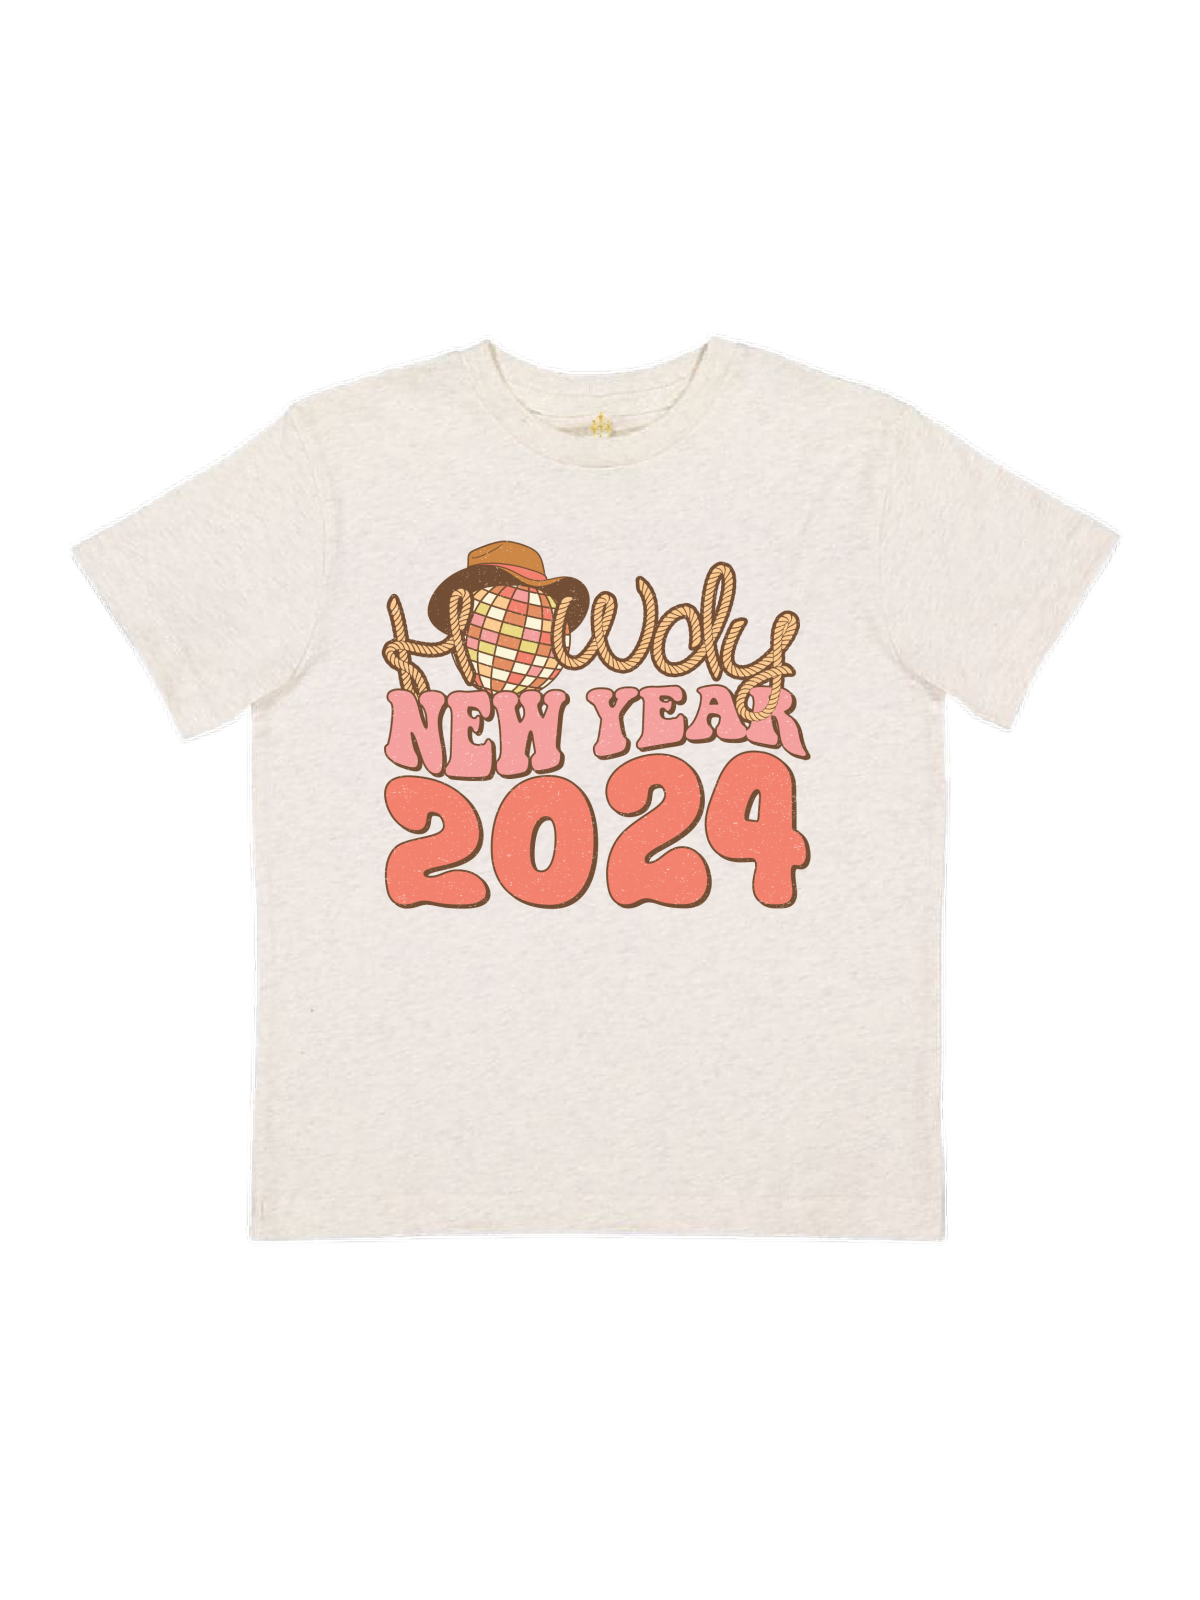 Howdy New Year 2024 Kids Long Sleeve Shirt